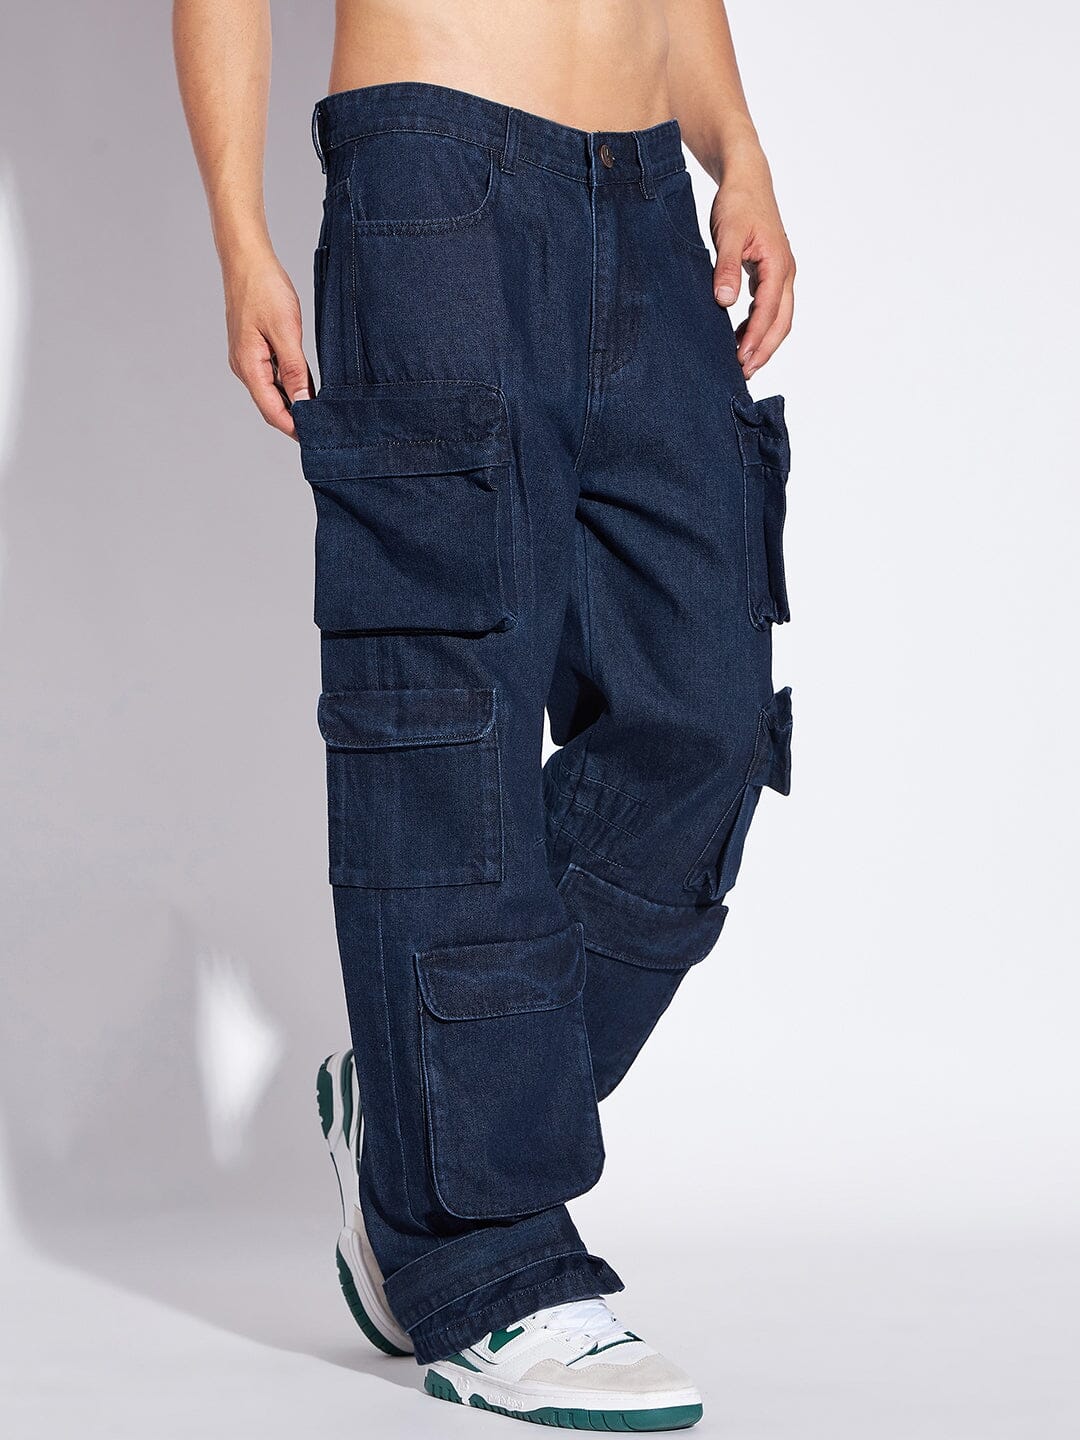 5 pants that aren't blue jeans — Urbanite | Suburbanite - Personal Wardrobe  Styling & Fashion Blog